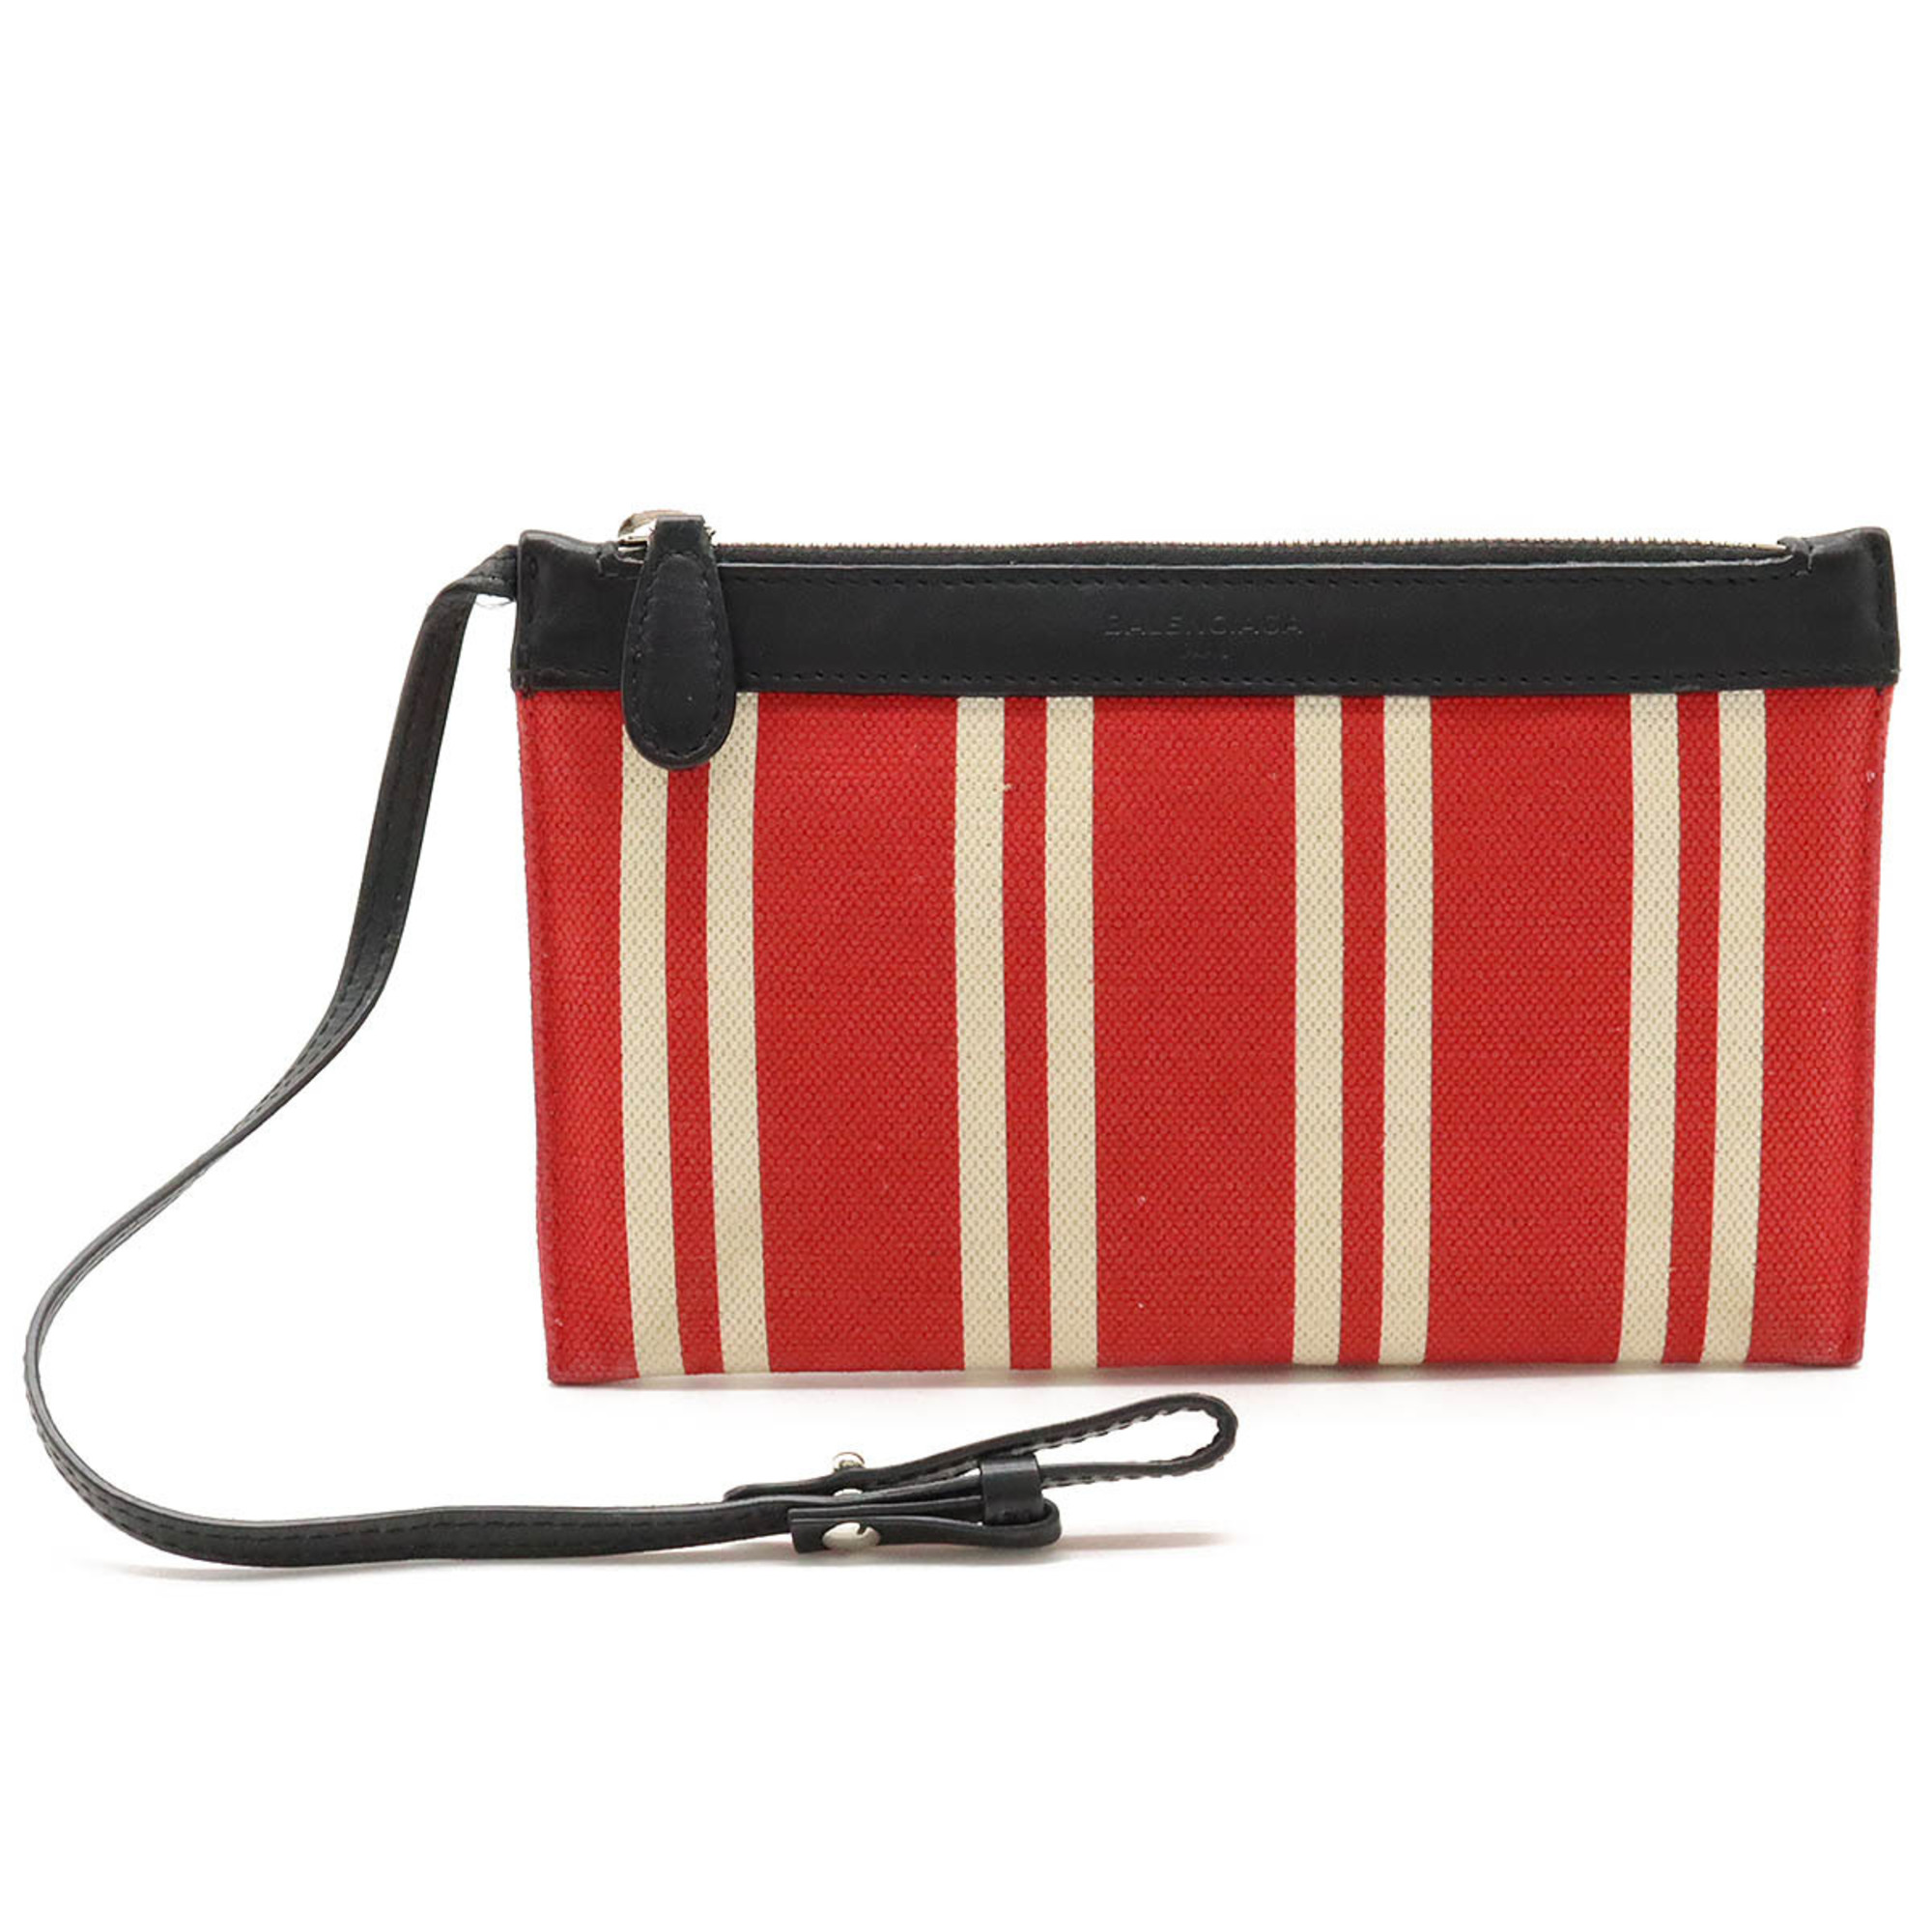 BALENCIAGA Navy Cabas S Stripe Tote Bag Handbag Canvas Leather Red Black 339933